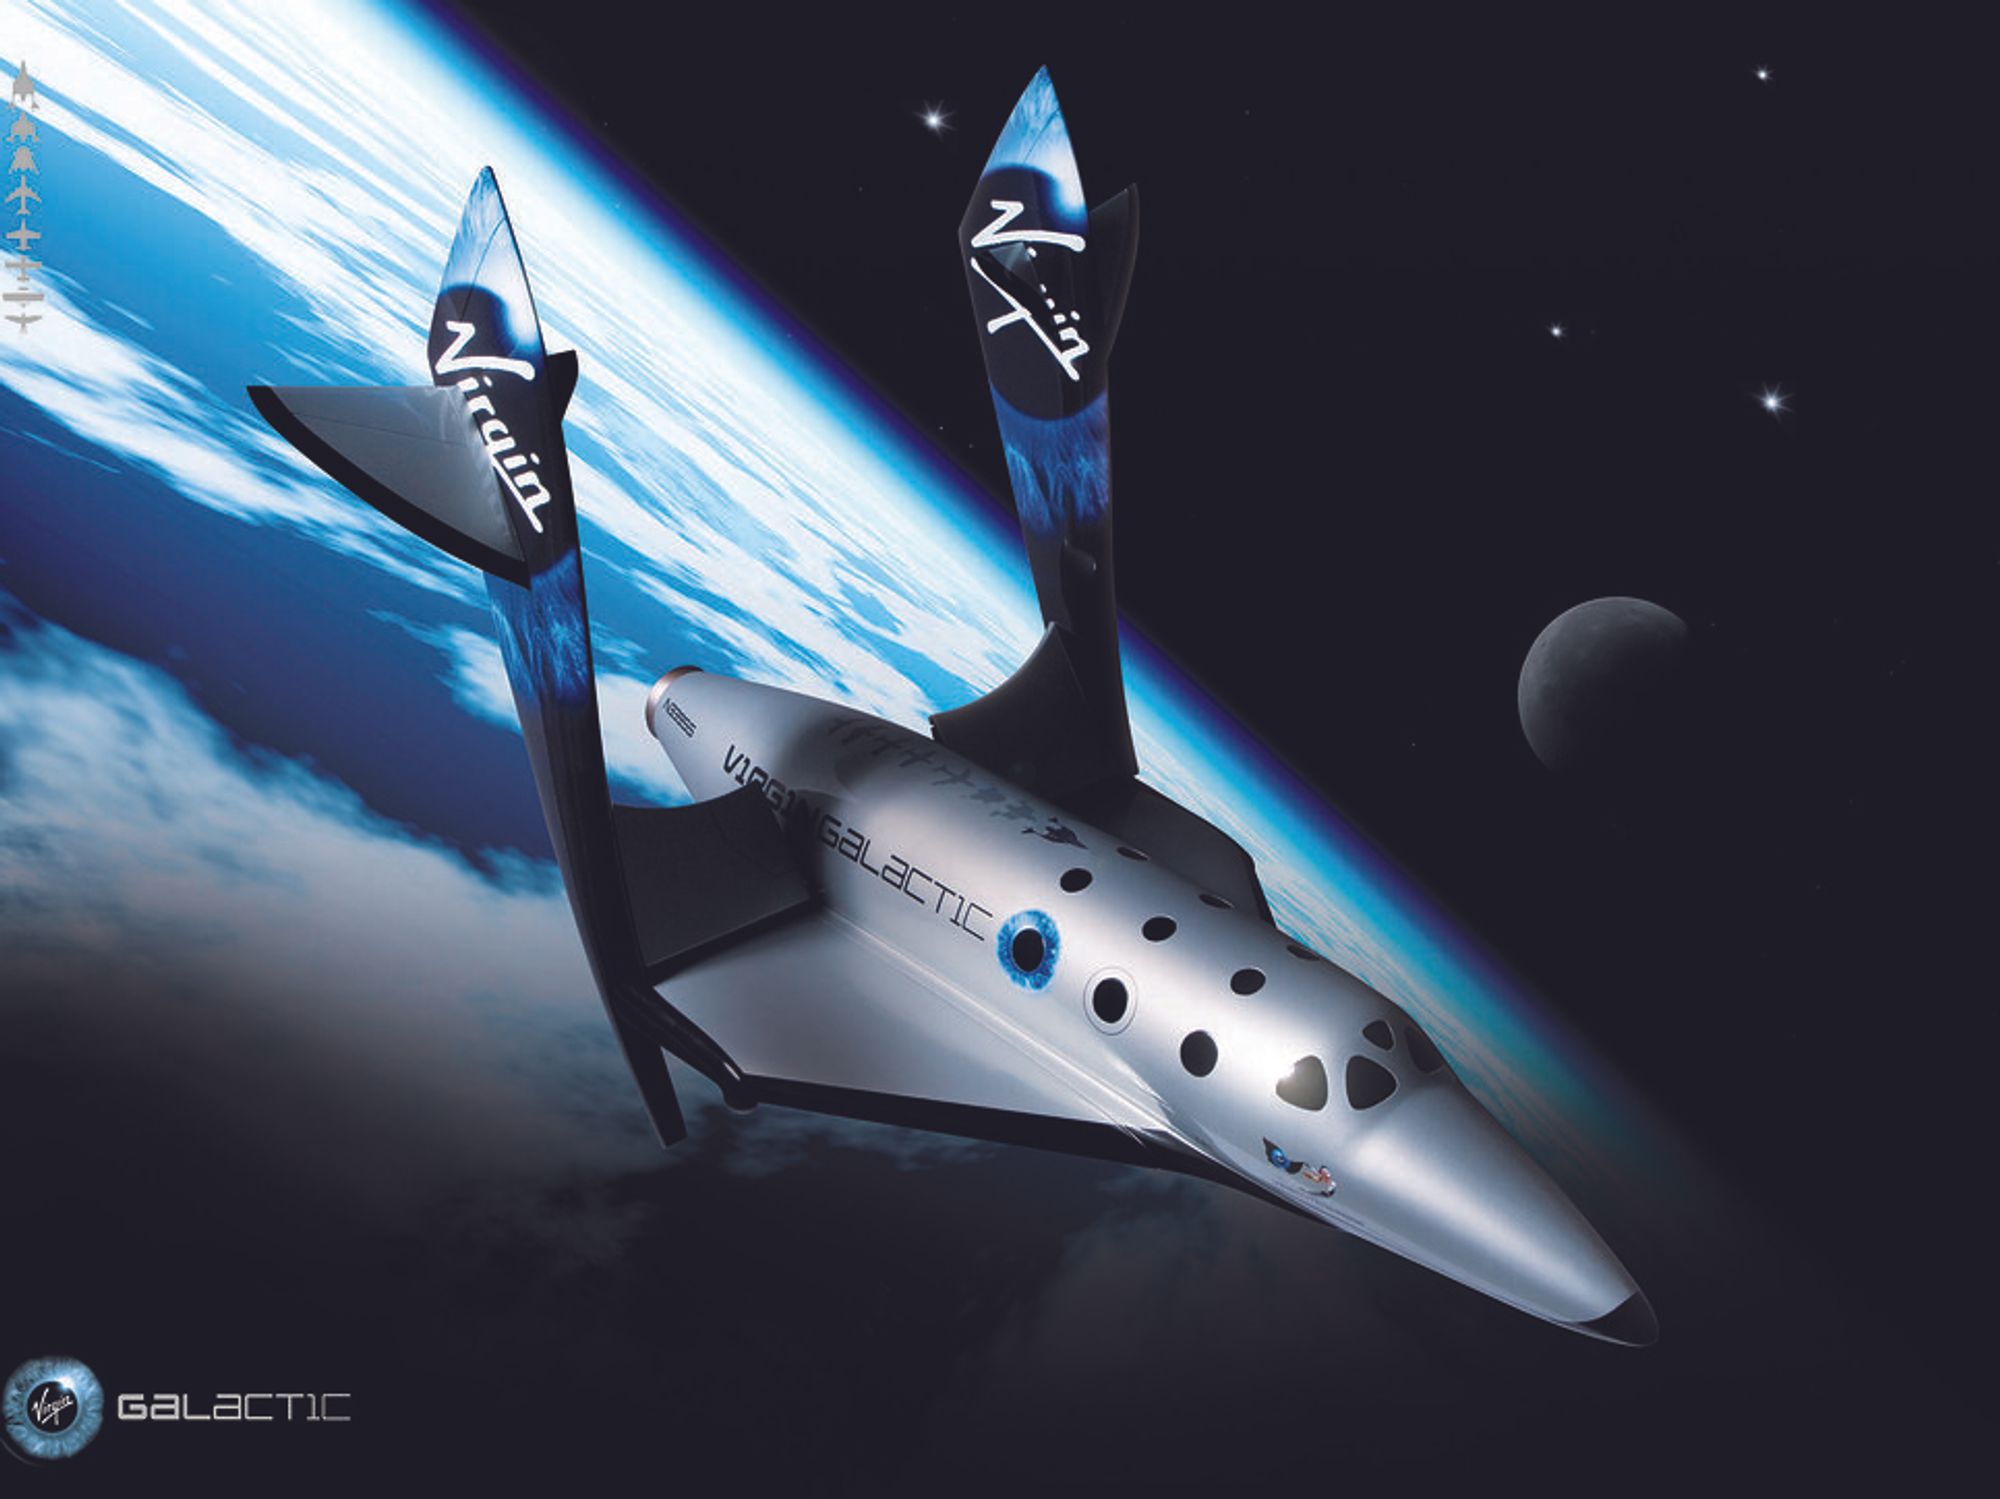 'Even Spaceships Must Return to Earth': Morgan Stanley Warns Investors on Virgin Galactic Stock